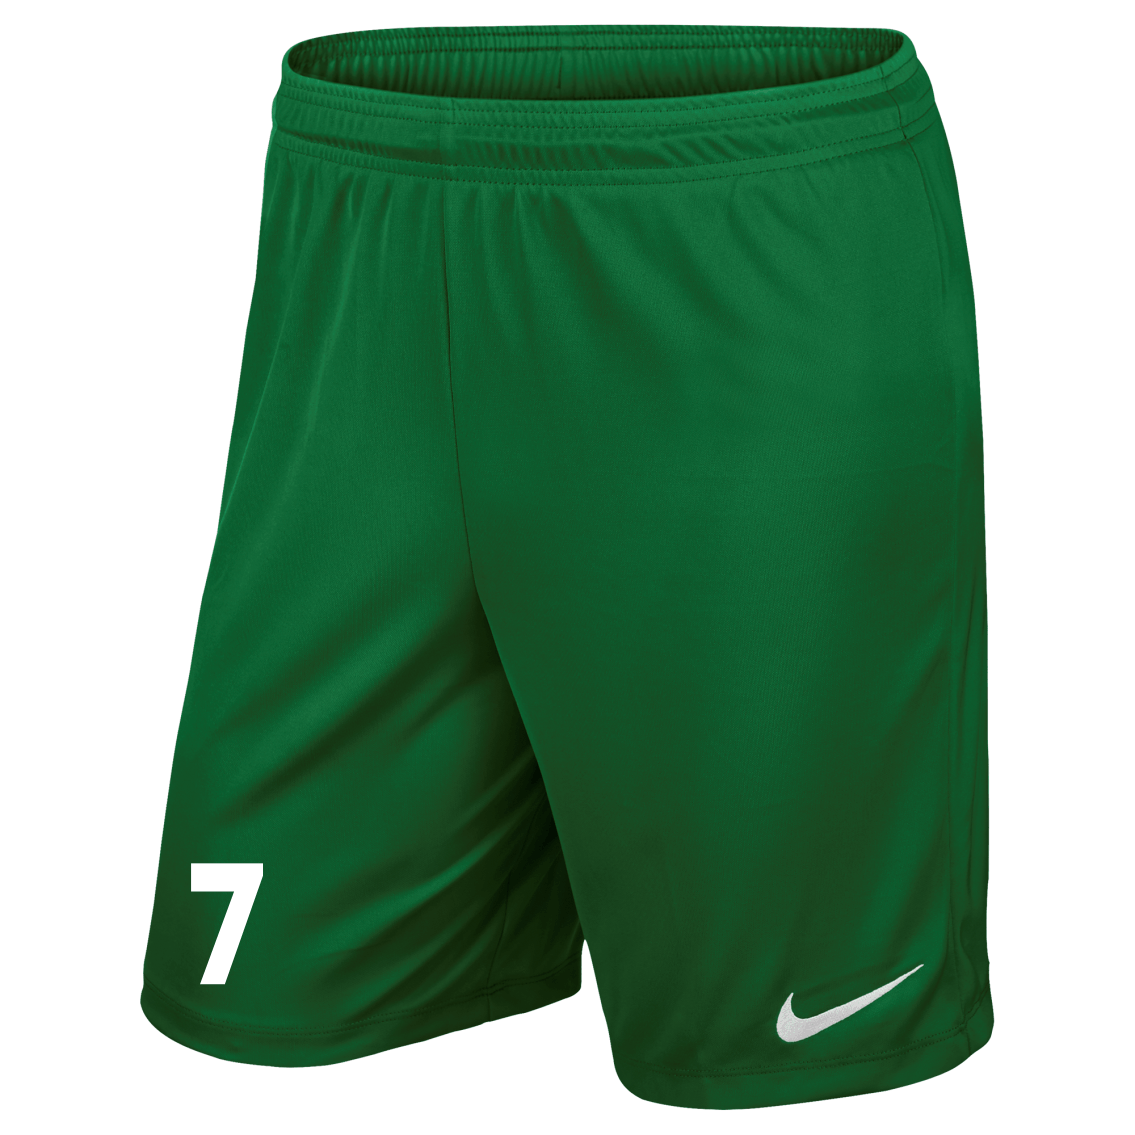 Burton Joyce FC - Nike Green Shorts